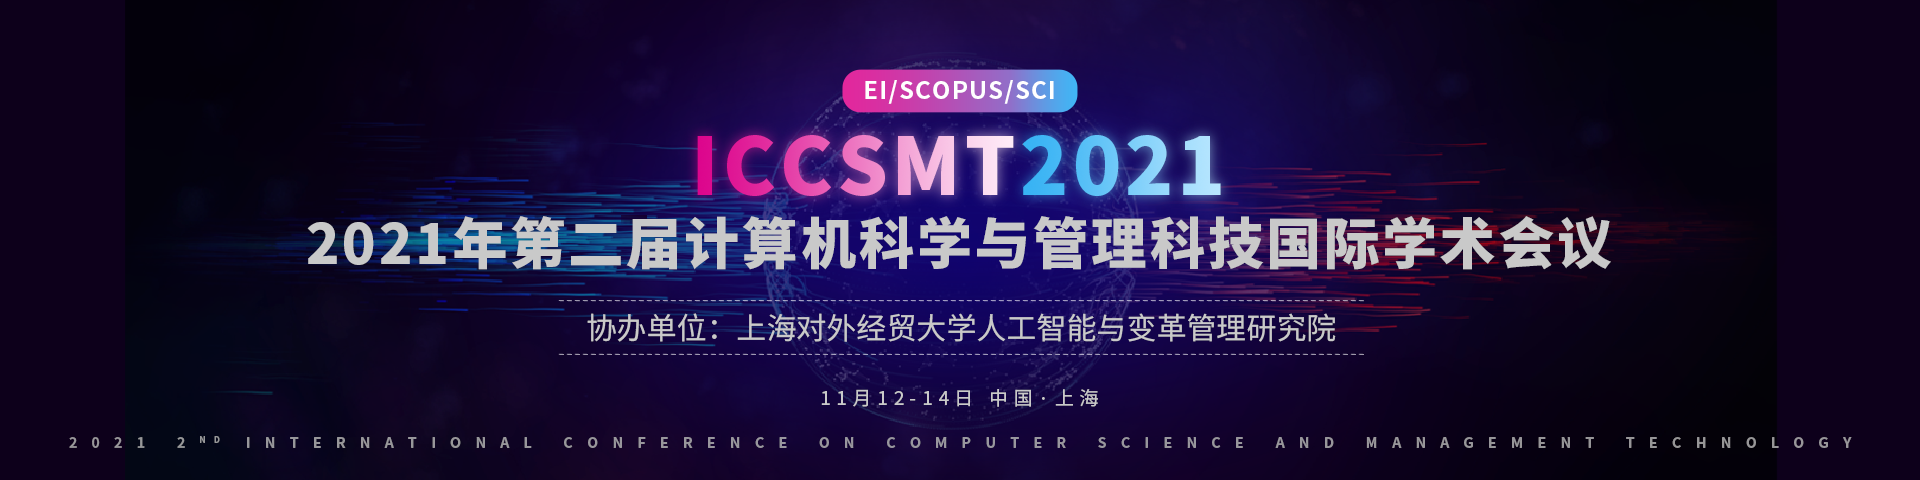 11月上海站-ICCSMT2021会议官网中文banner-何雪仪-20210311.png